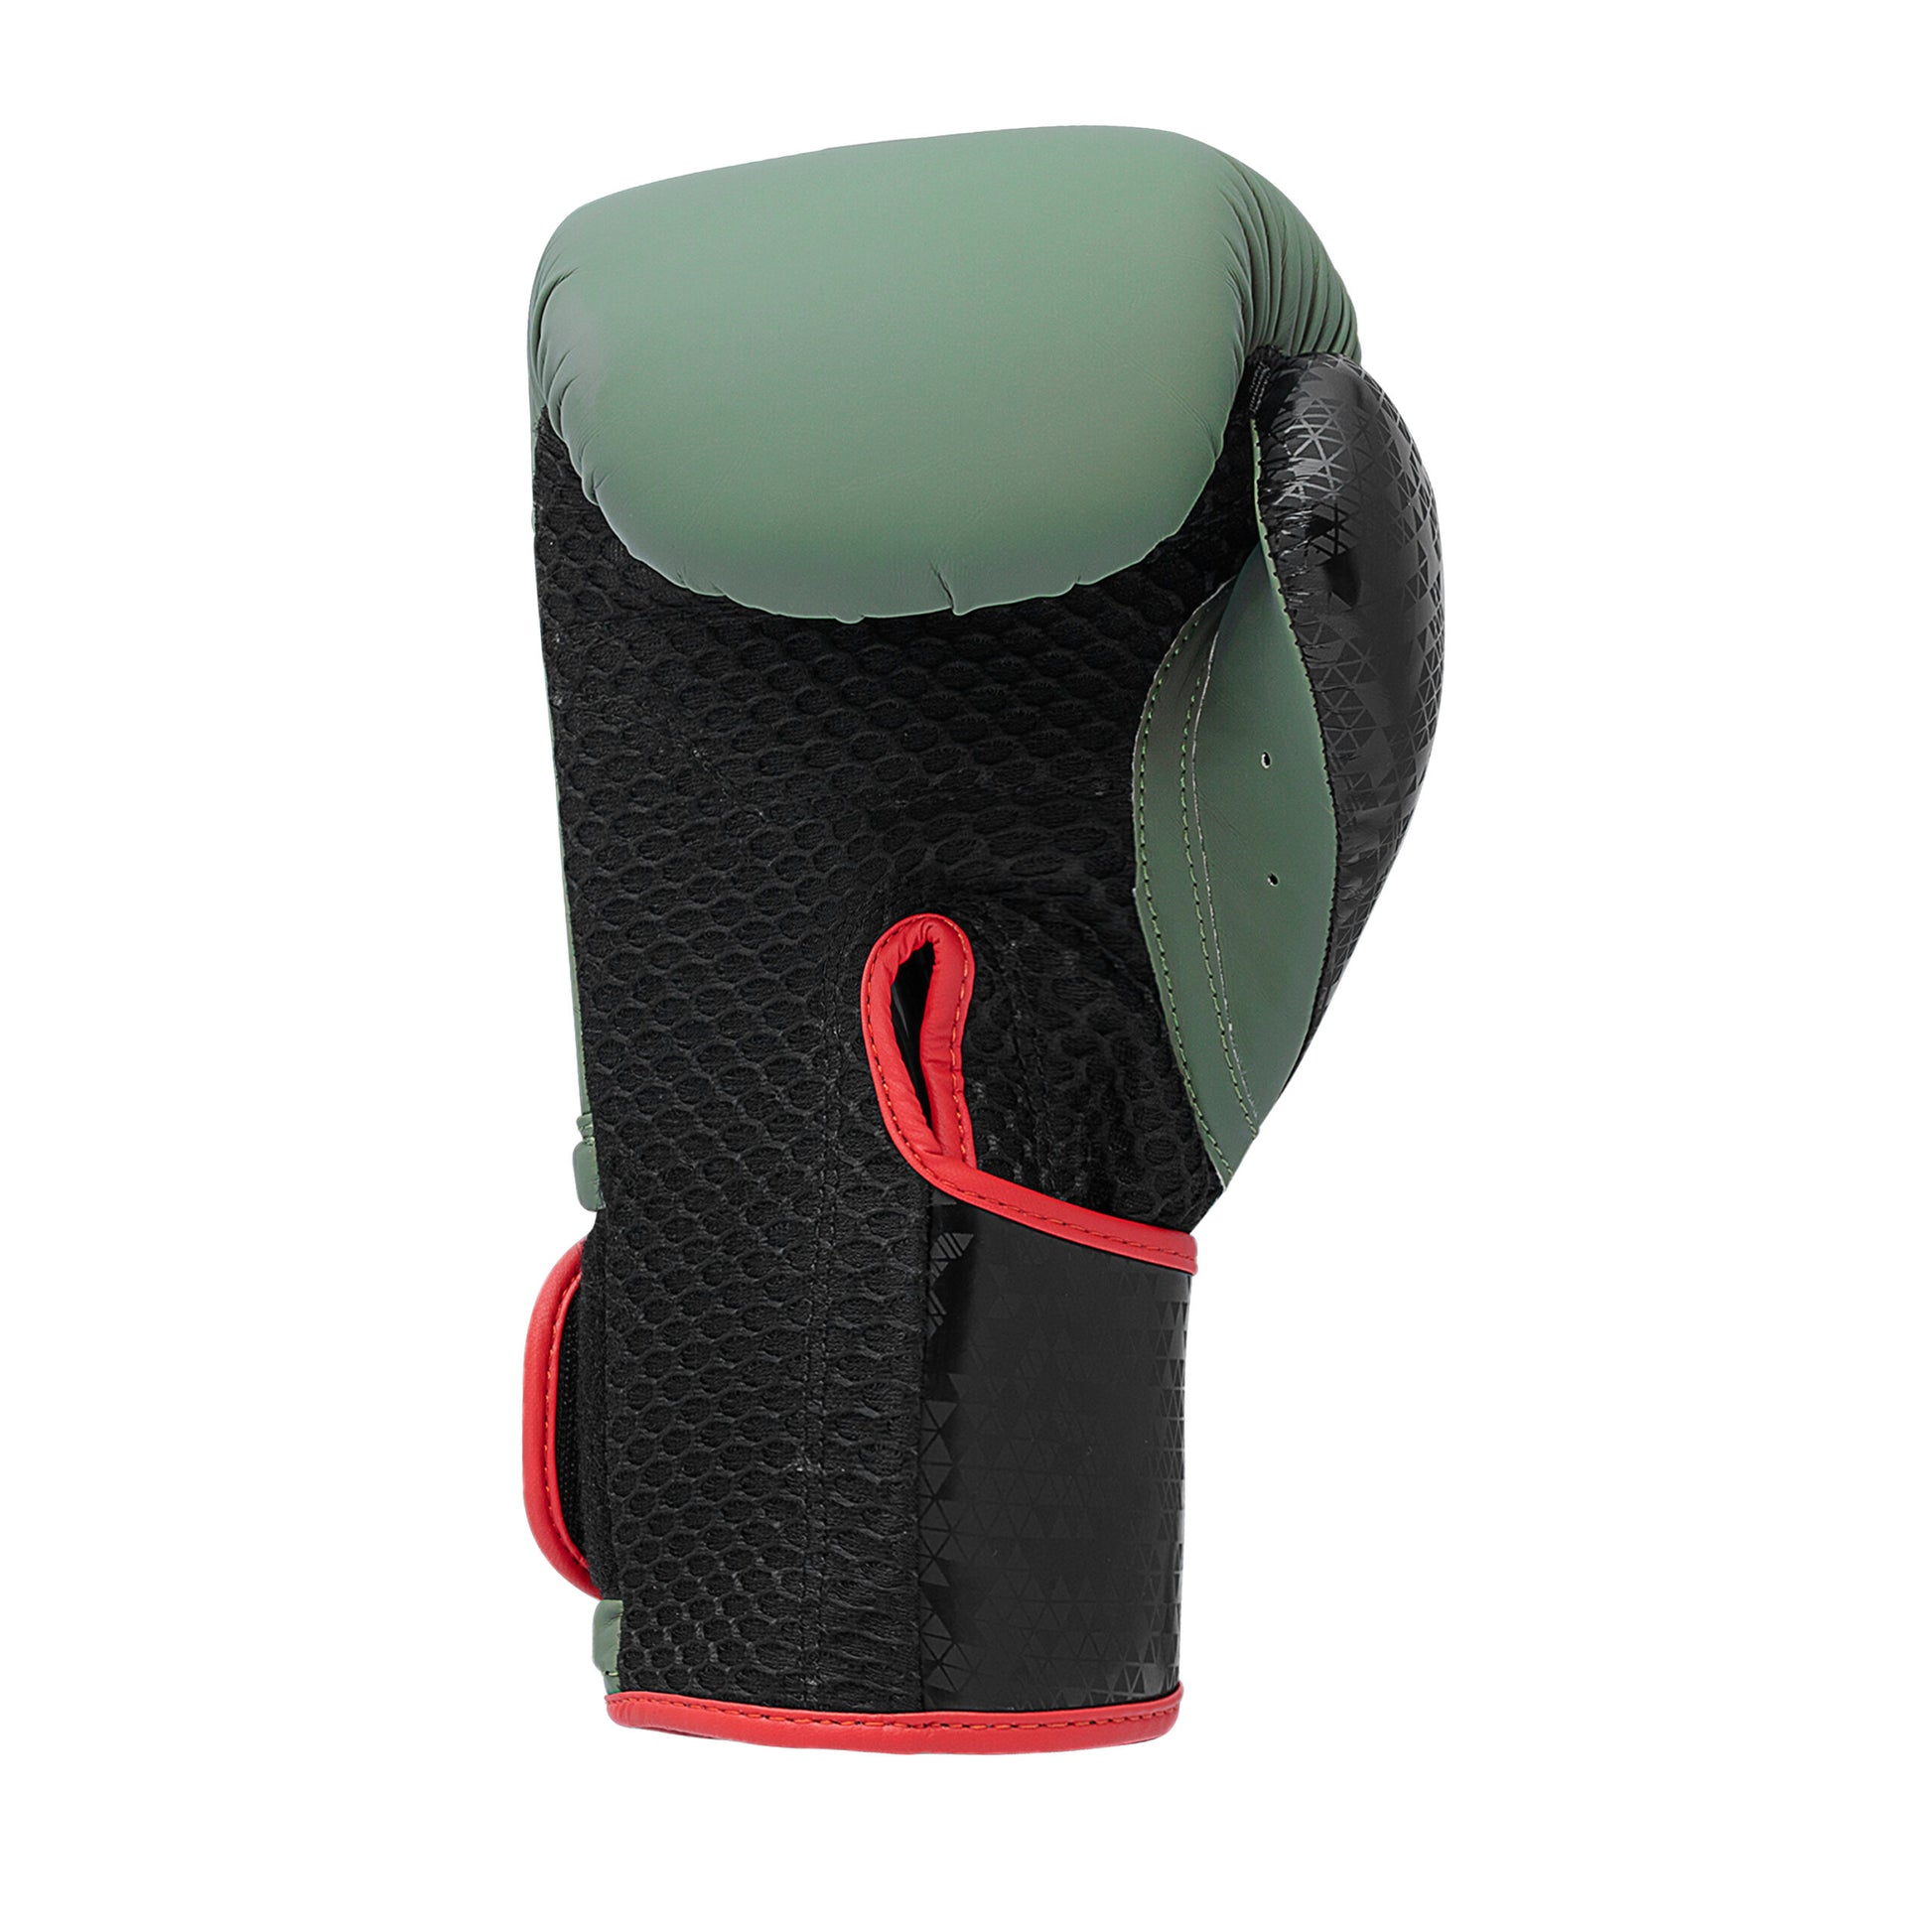 Adic50tg Combat 50 Training Boxing Gloves Orbit Green Black 03